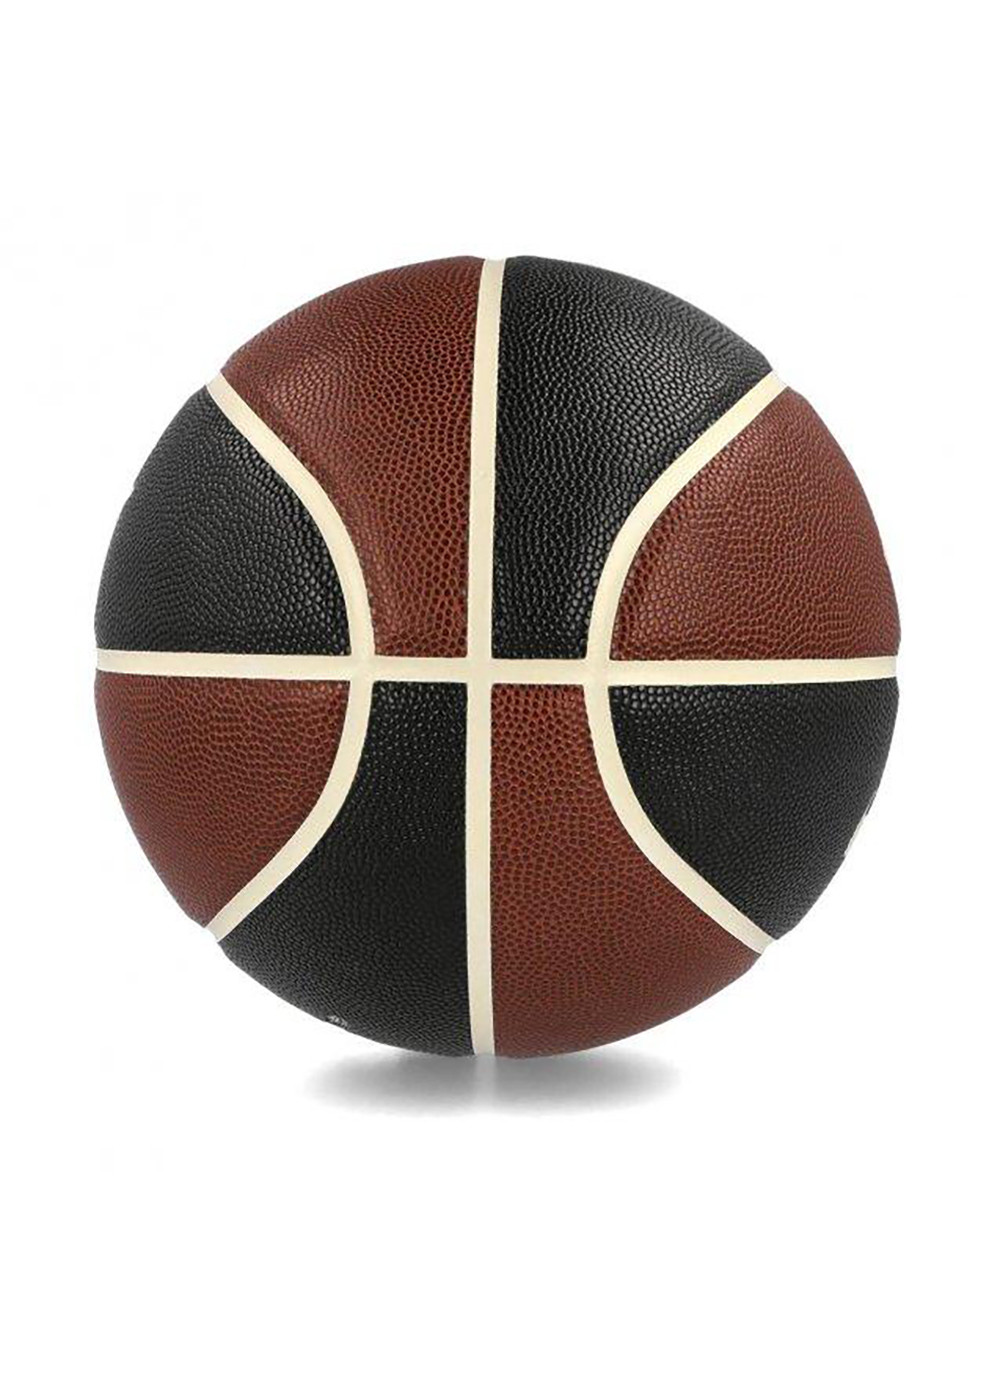 М'яч баскетбольний All Court 2.0 8P Giannis Antetokounmpo р. 7 Amber/Sail/Black/Sail (N.100.4138.812.07) Nike (253678180)